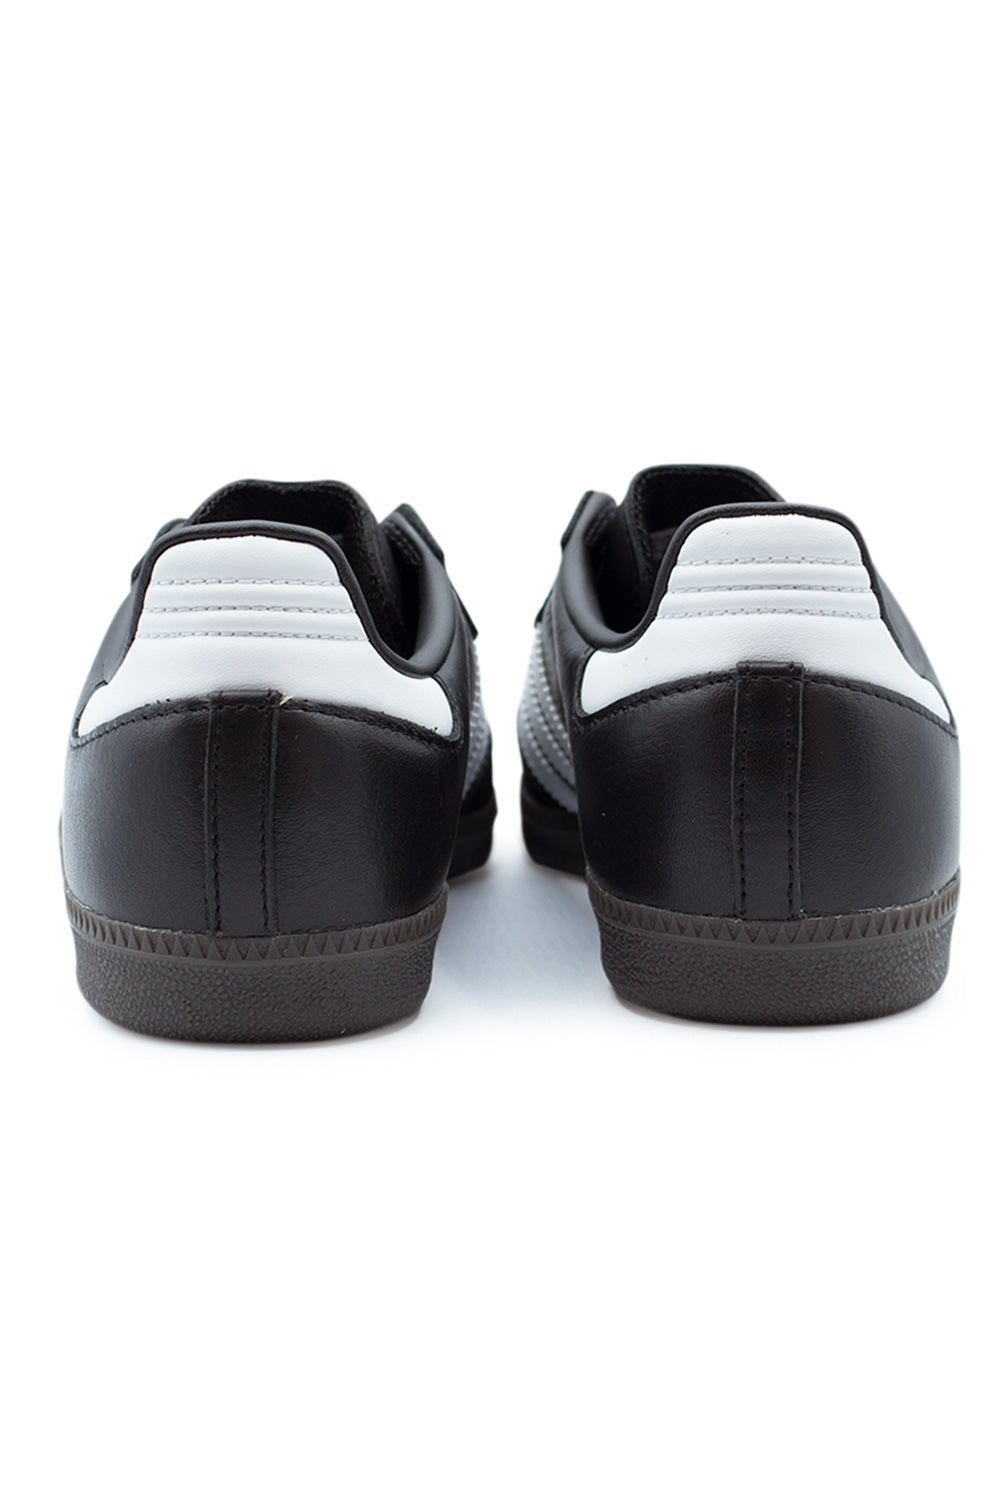 Adidas Samba ADV Shoe Core Black / Cloud White / Gold Metallic - BONKERS